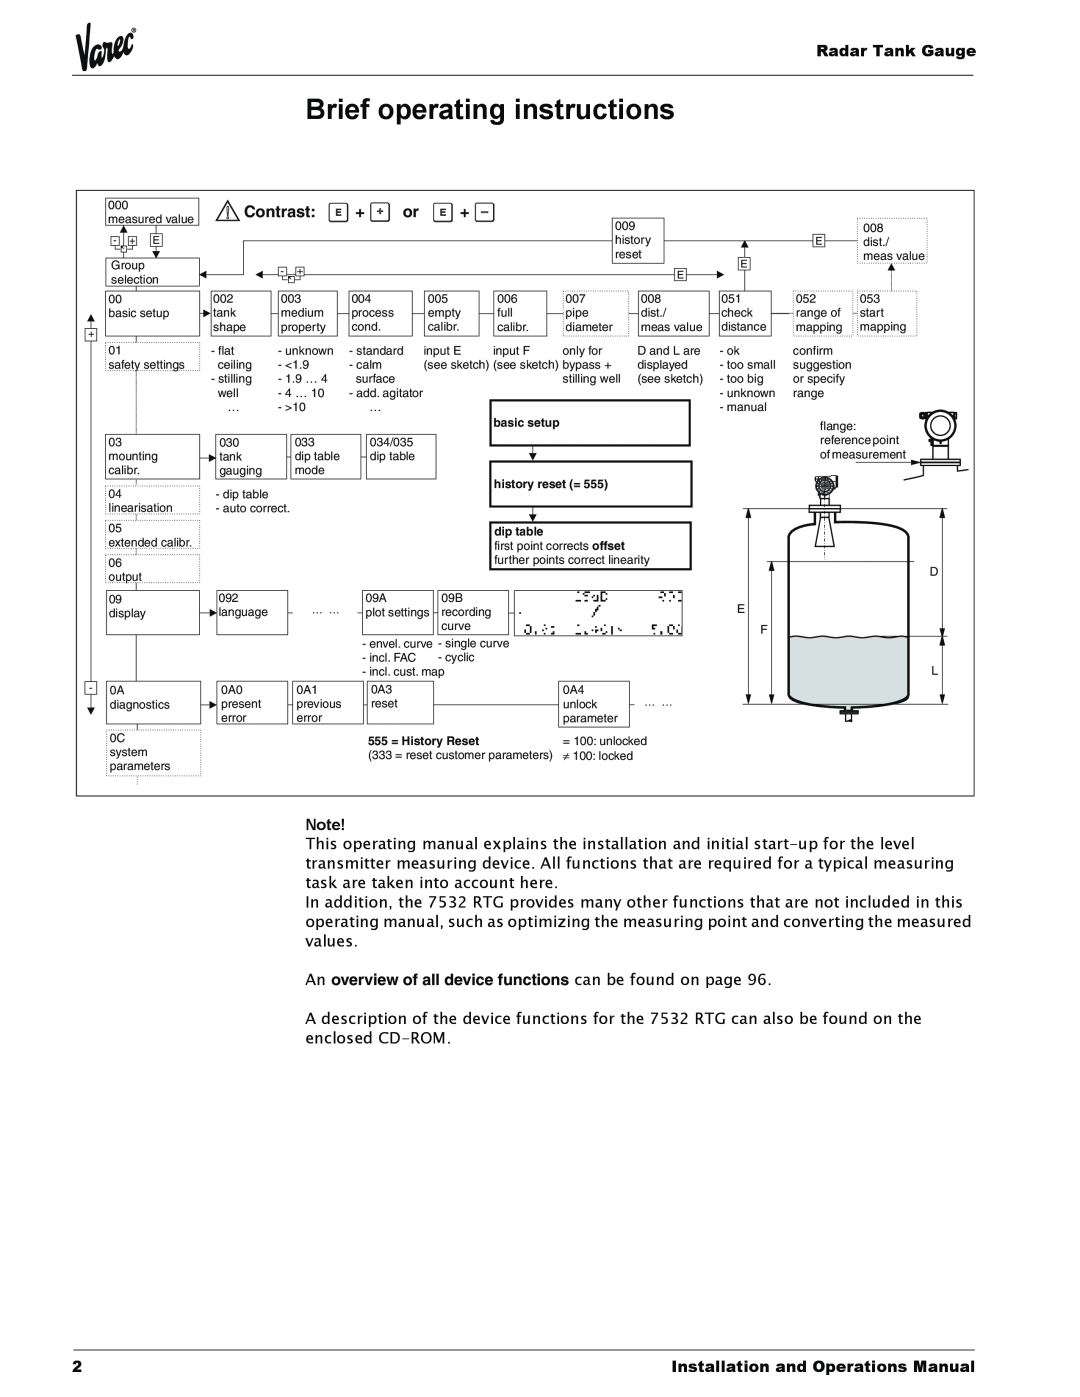 Lightning Audio 7532 manual Brief operating instructions, Radar Tank Gauge, Contrast, Installation and Operations Manual 